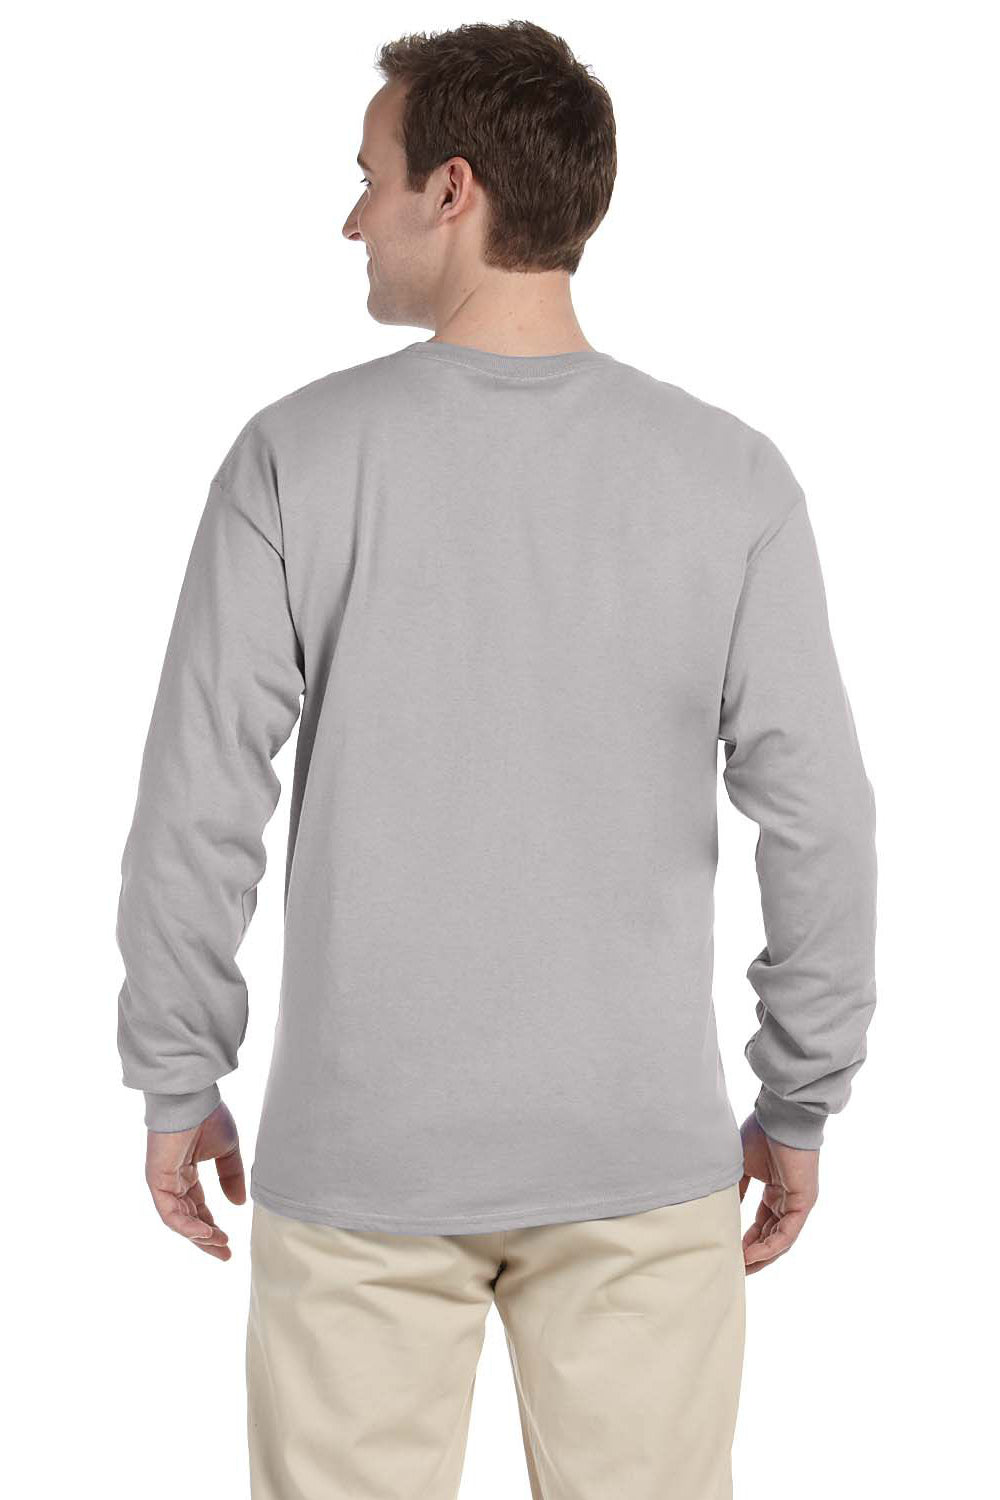 Fruit Of The Loom 4930 Mens HD Jersey Long Sleeve Crewneck T-Shirt Silver Grey Back